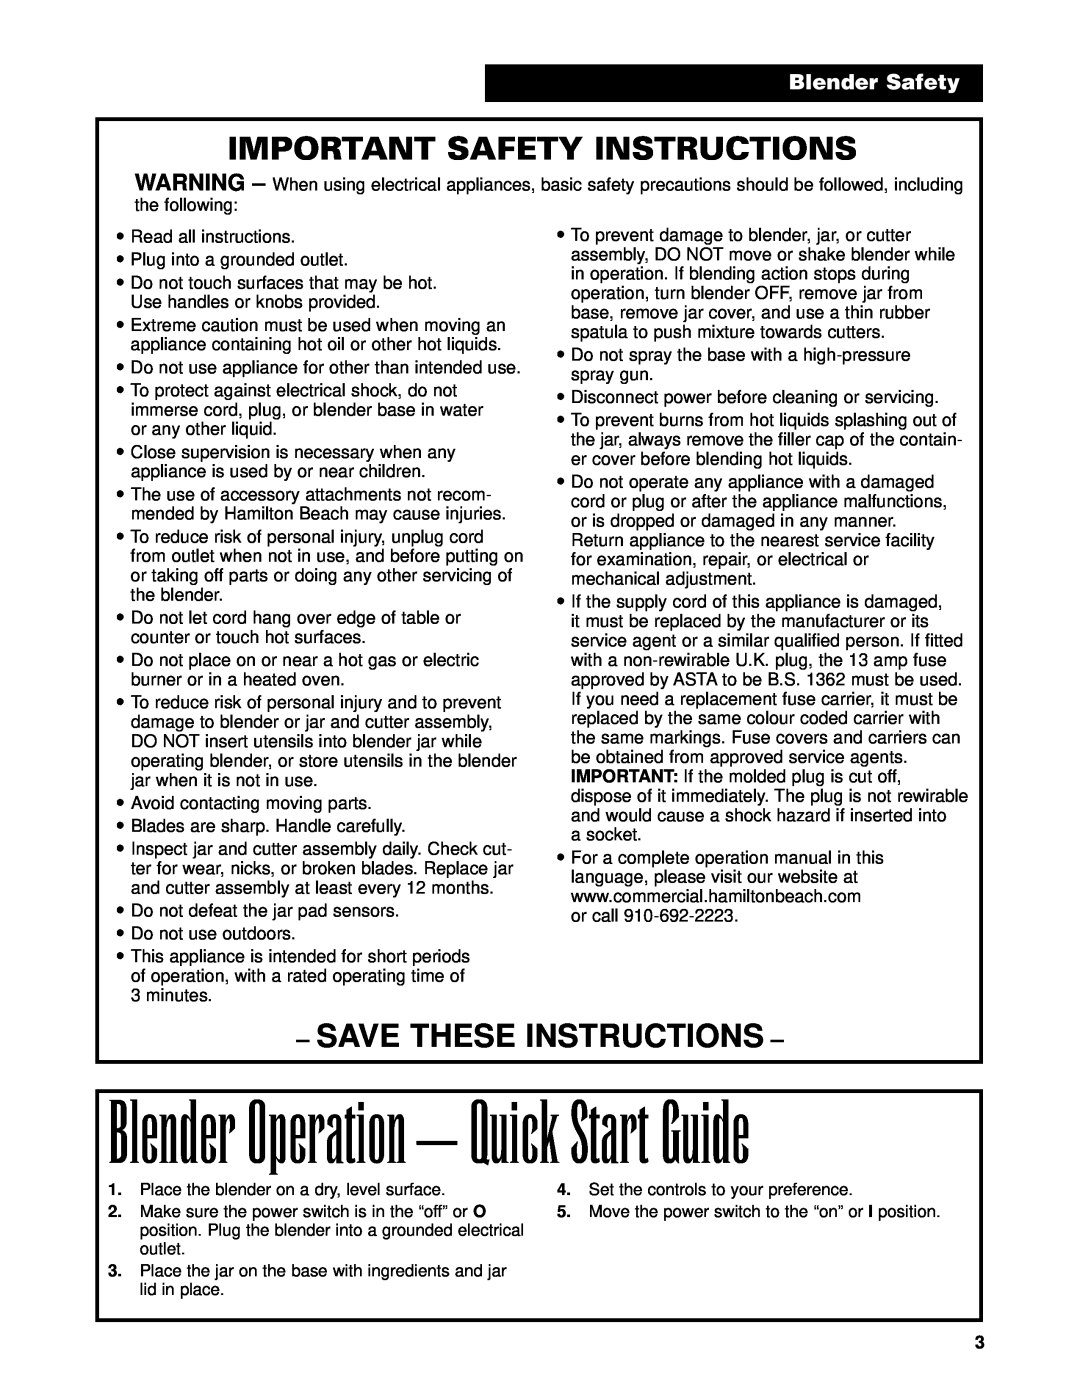 Hamilton Beach Bar Blender Blender Operation - Quick Start Guide, Important Safety Instructions, Savethese Instructions 